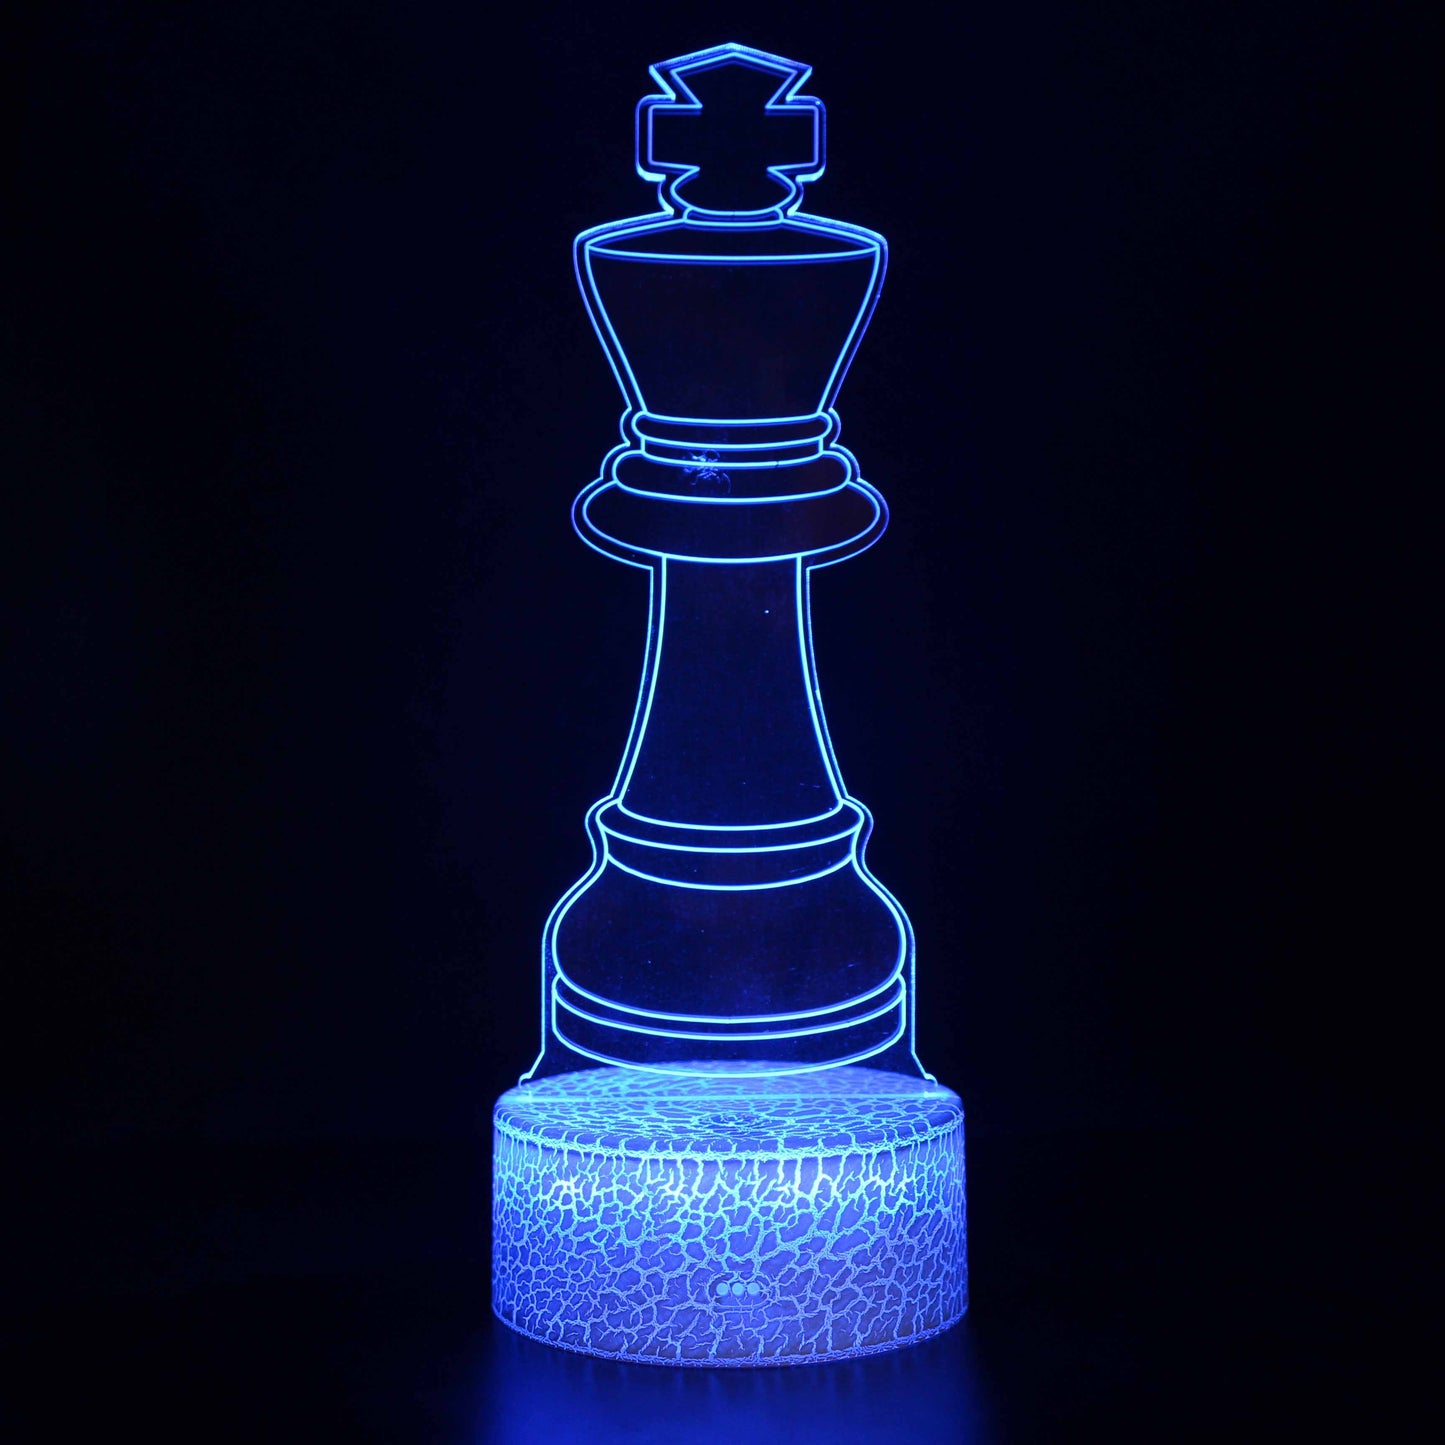 Chess King 3D Night Light